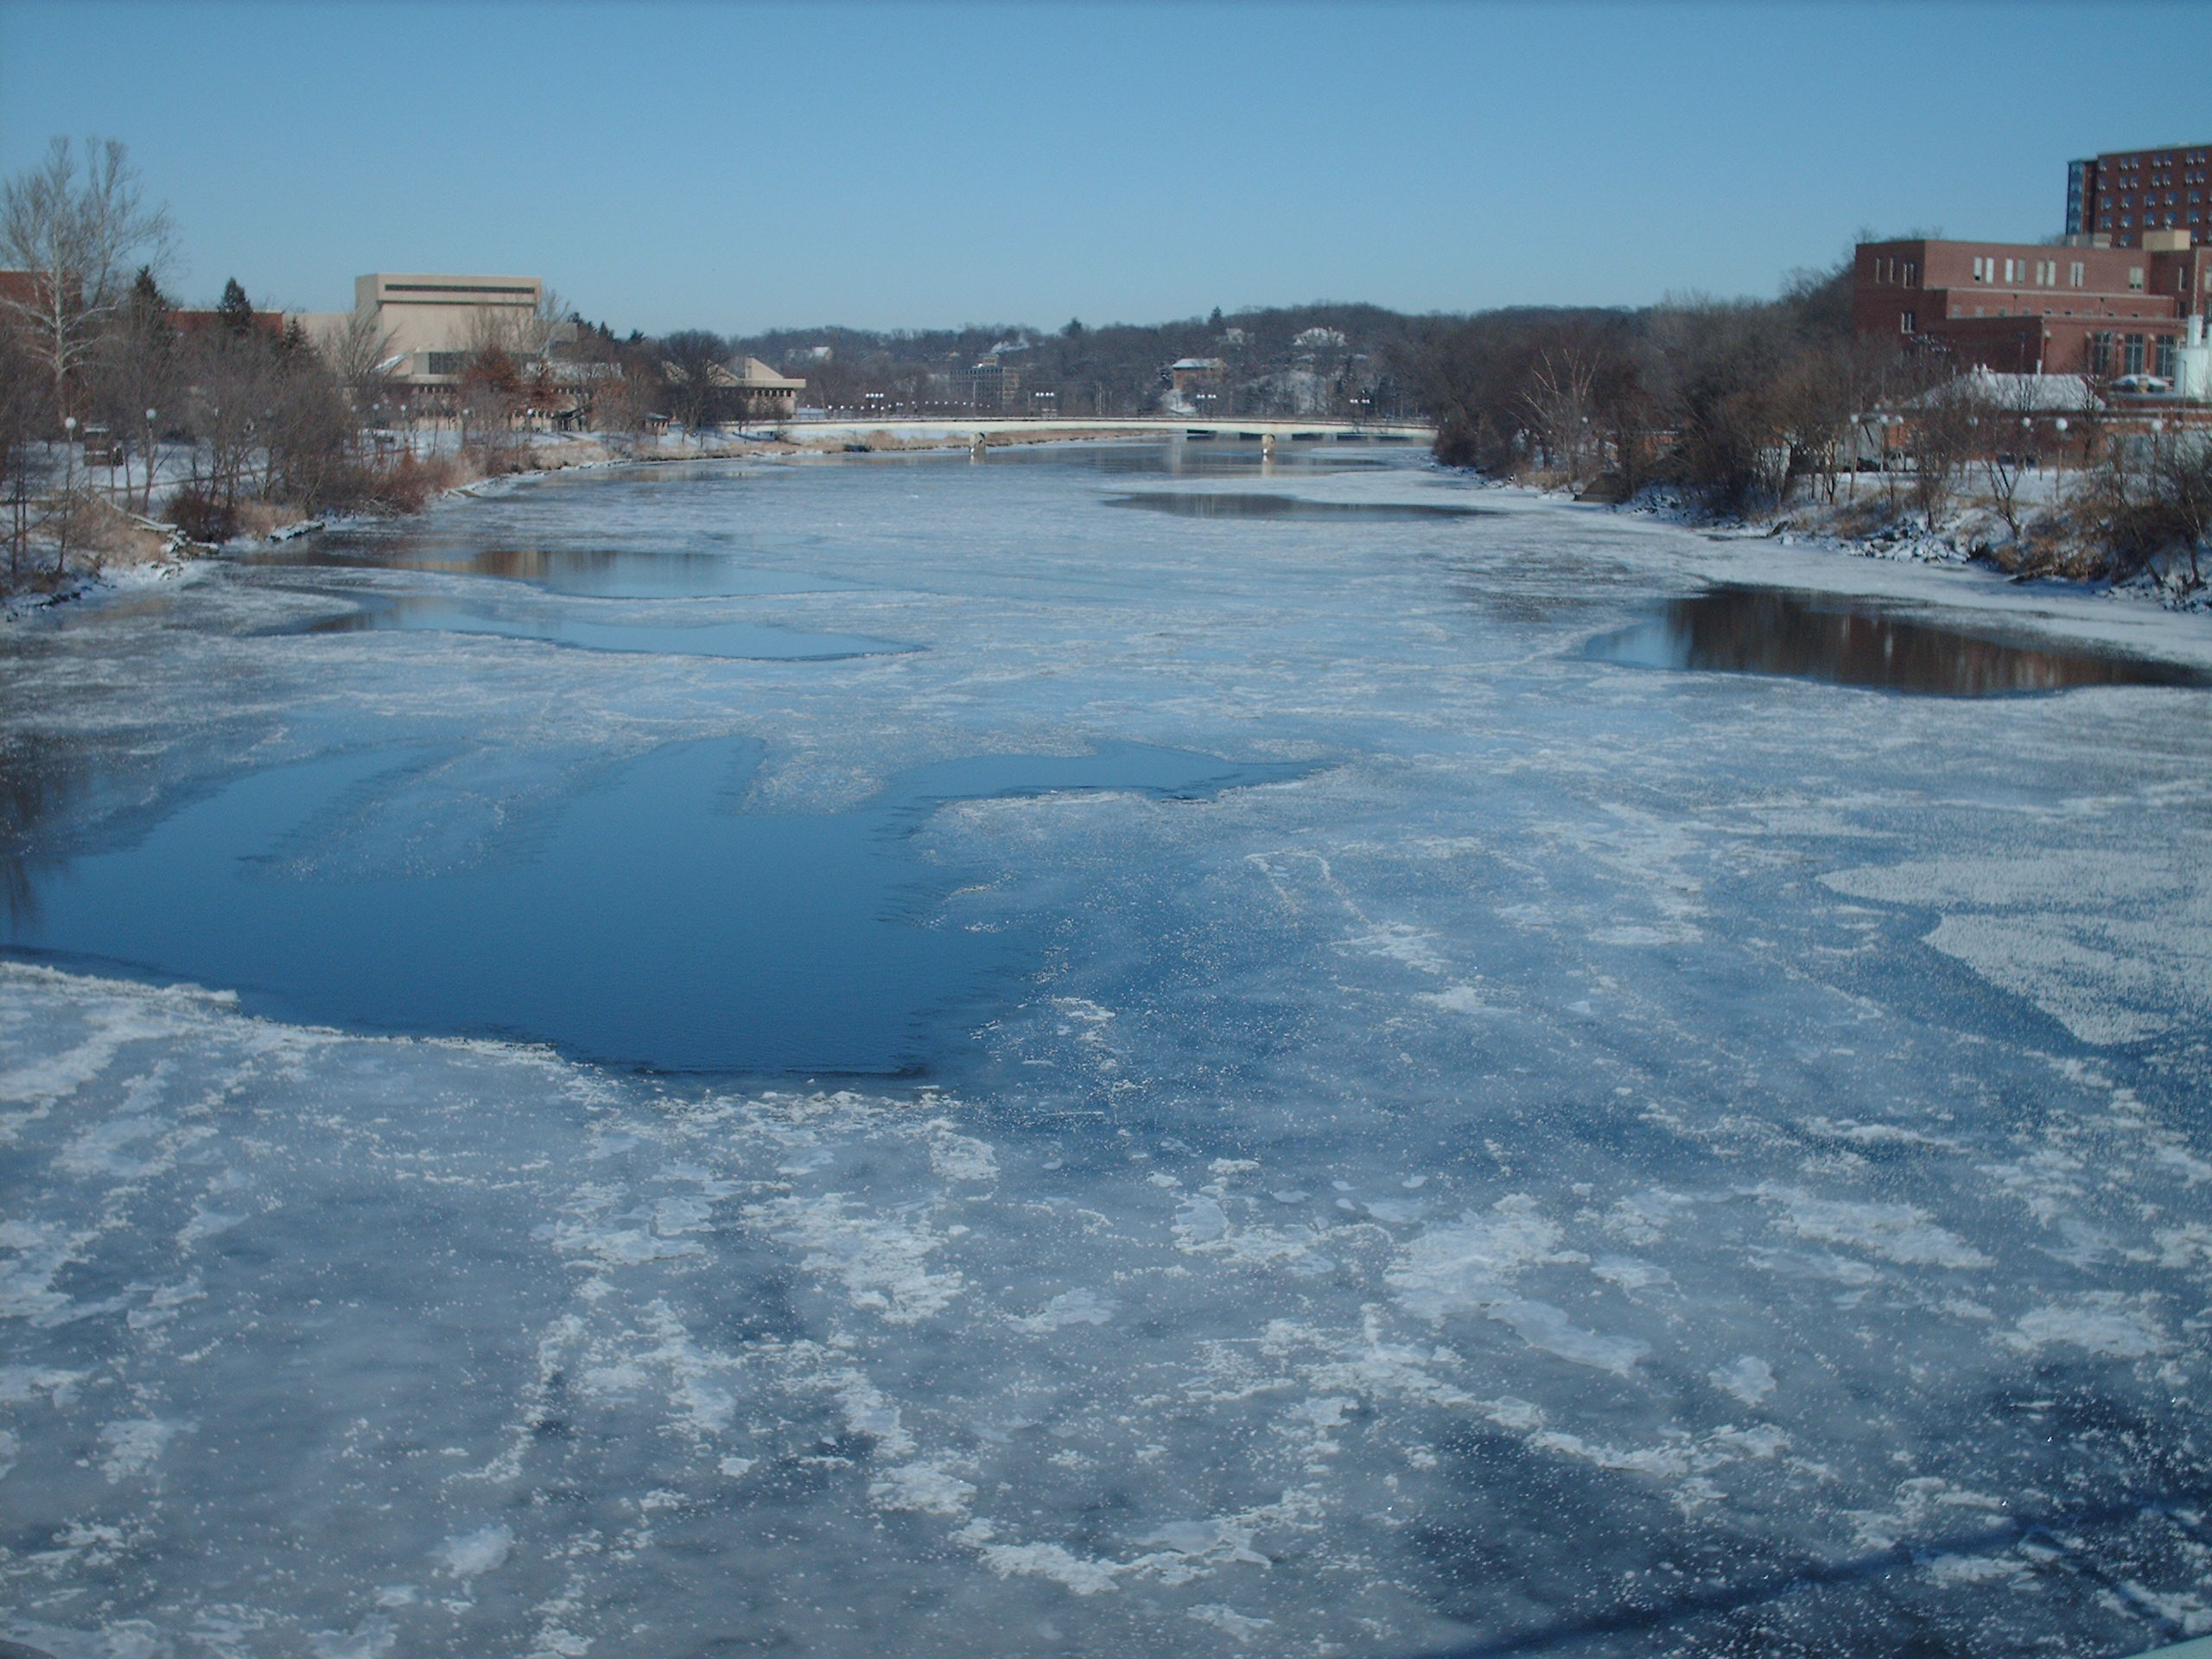 File:Iowa River with ice.JPG - Wikimedia Commons